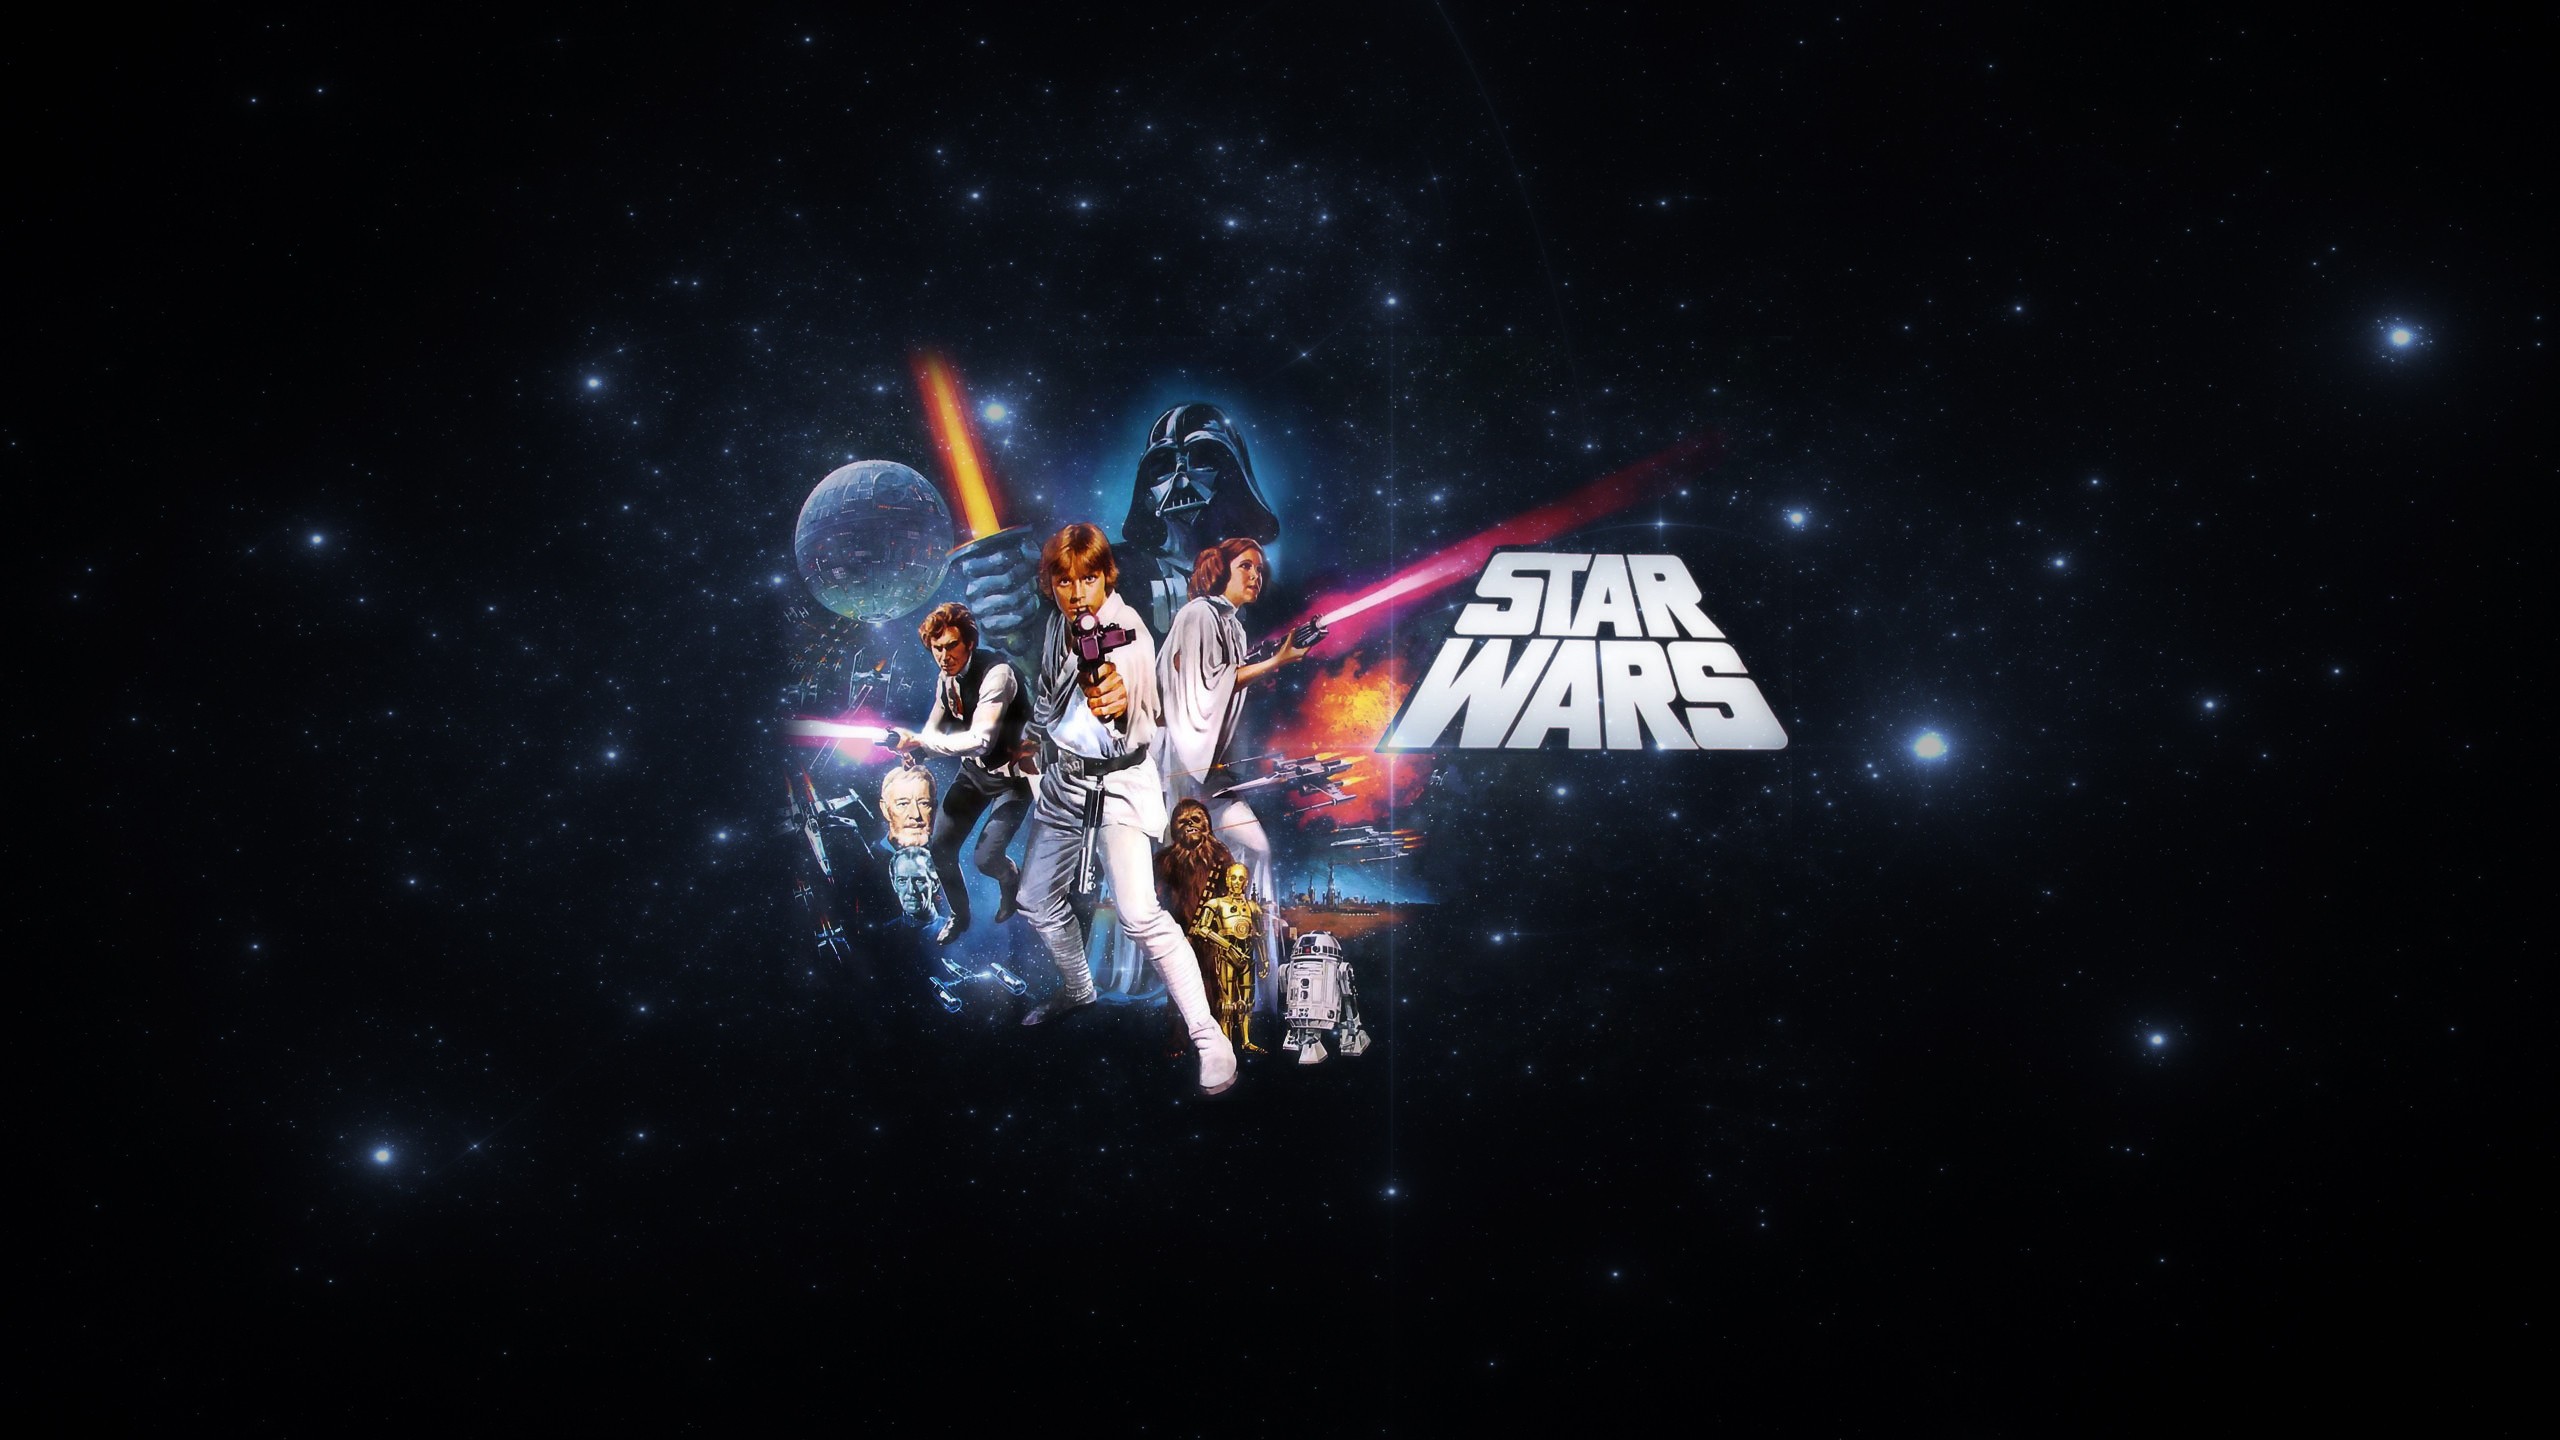 Star Wars, Luke Skywalker, Han Solo, Princess Leia, Darth Vader, Obi Wan Kenobi, R2 D2, Chewbacca, Artwork, Movies Wallpaper